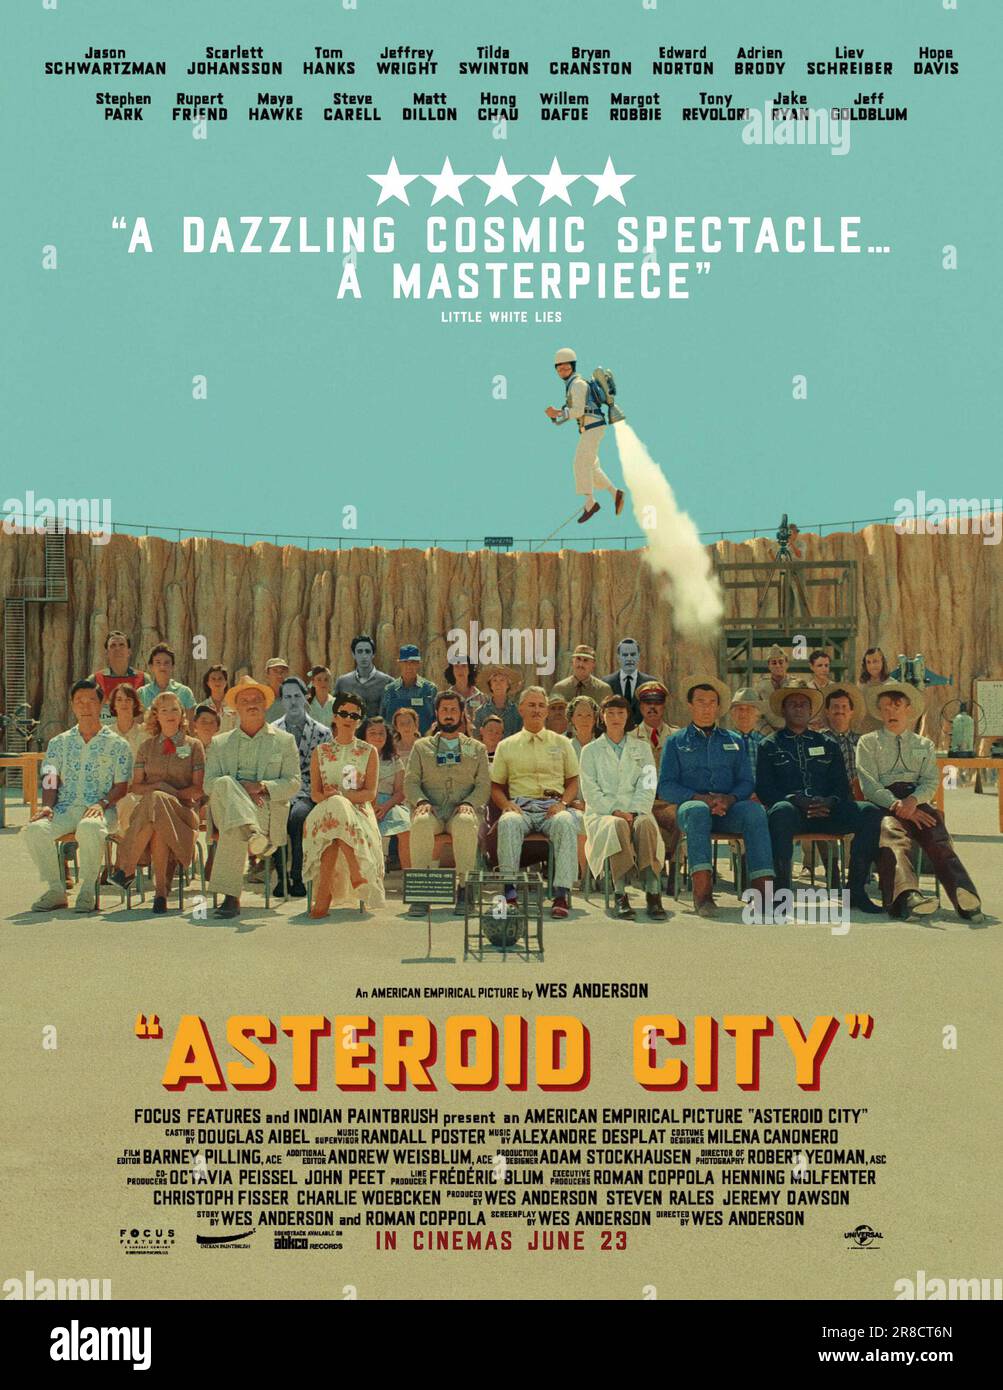 Asteroid City Film poster Stock Photo - Alamy